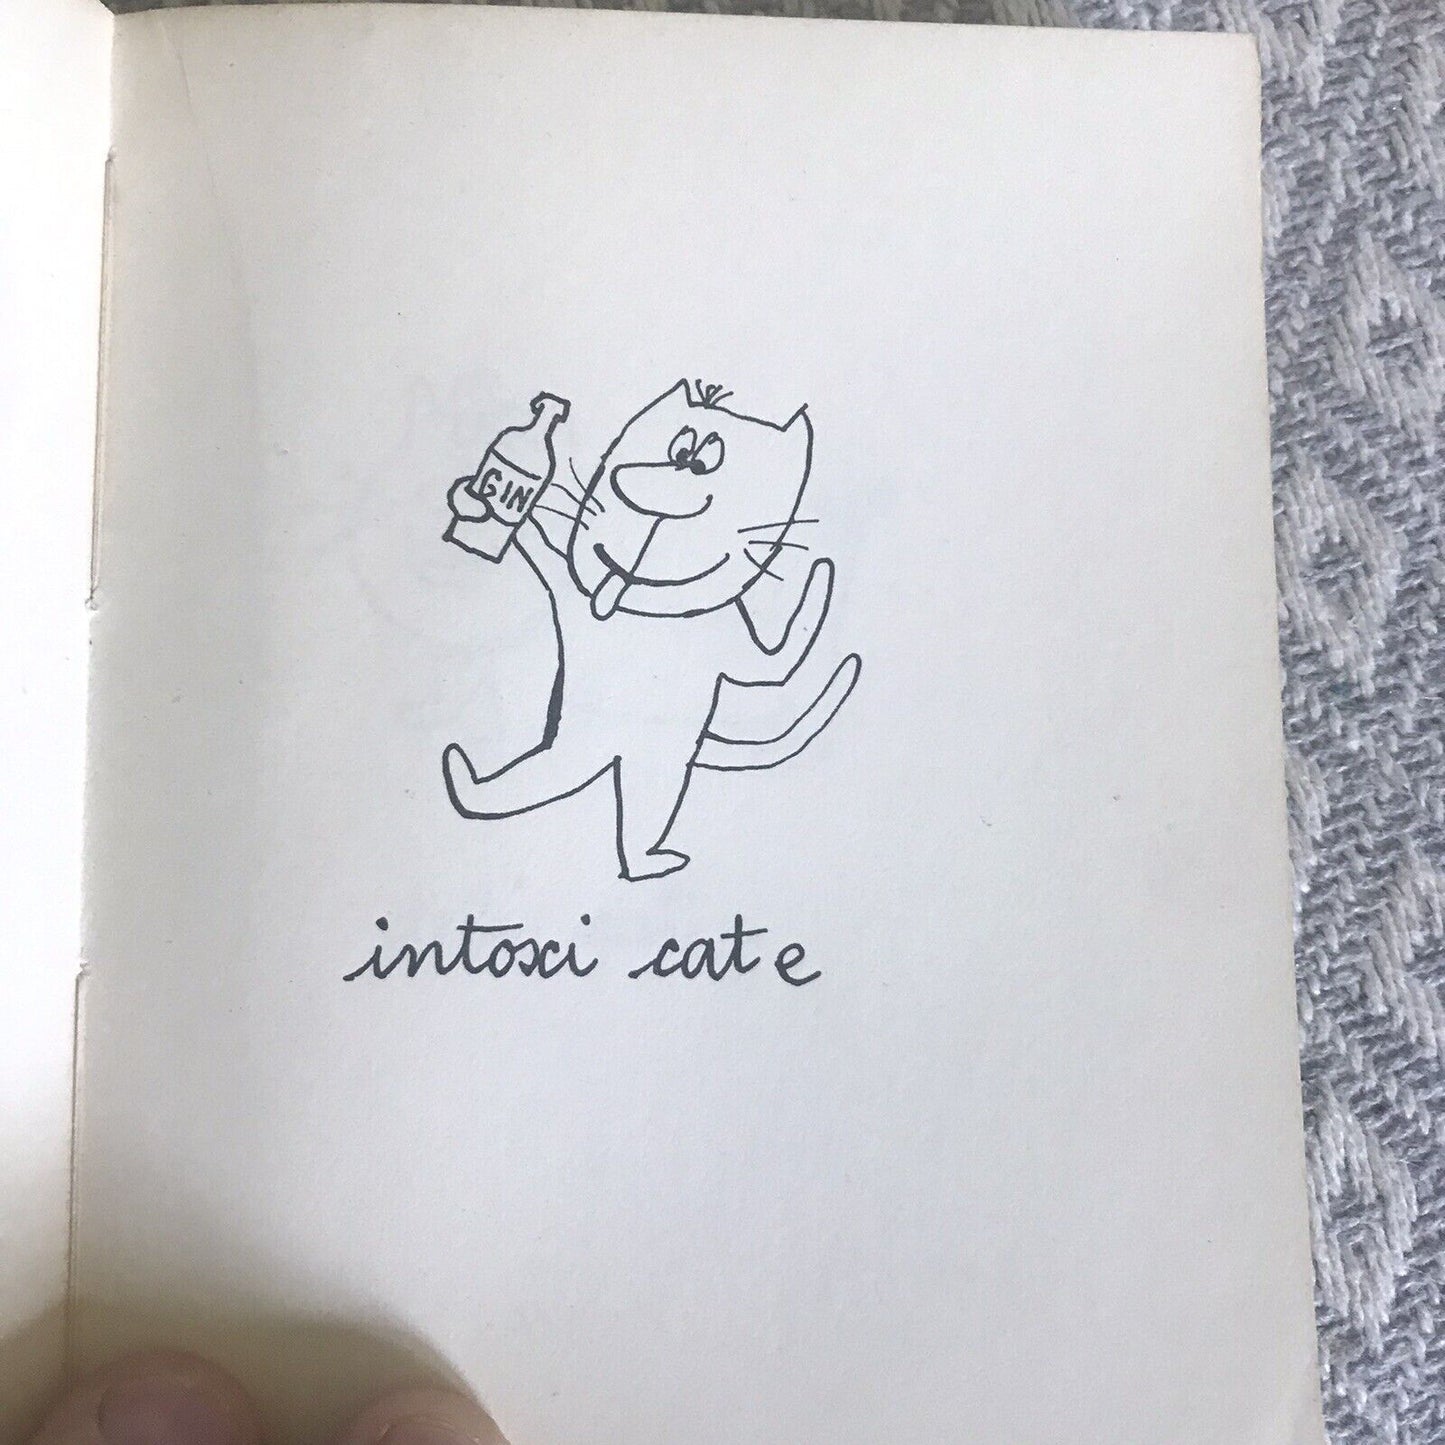 1959 Scatty – Siné (Max Reinhardt Verlag)